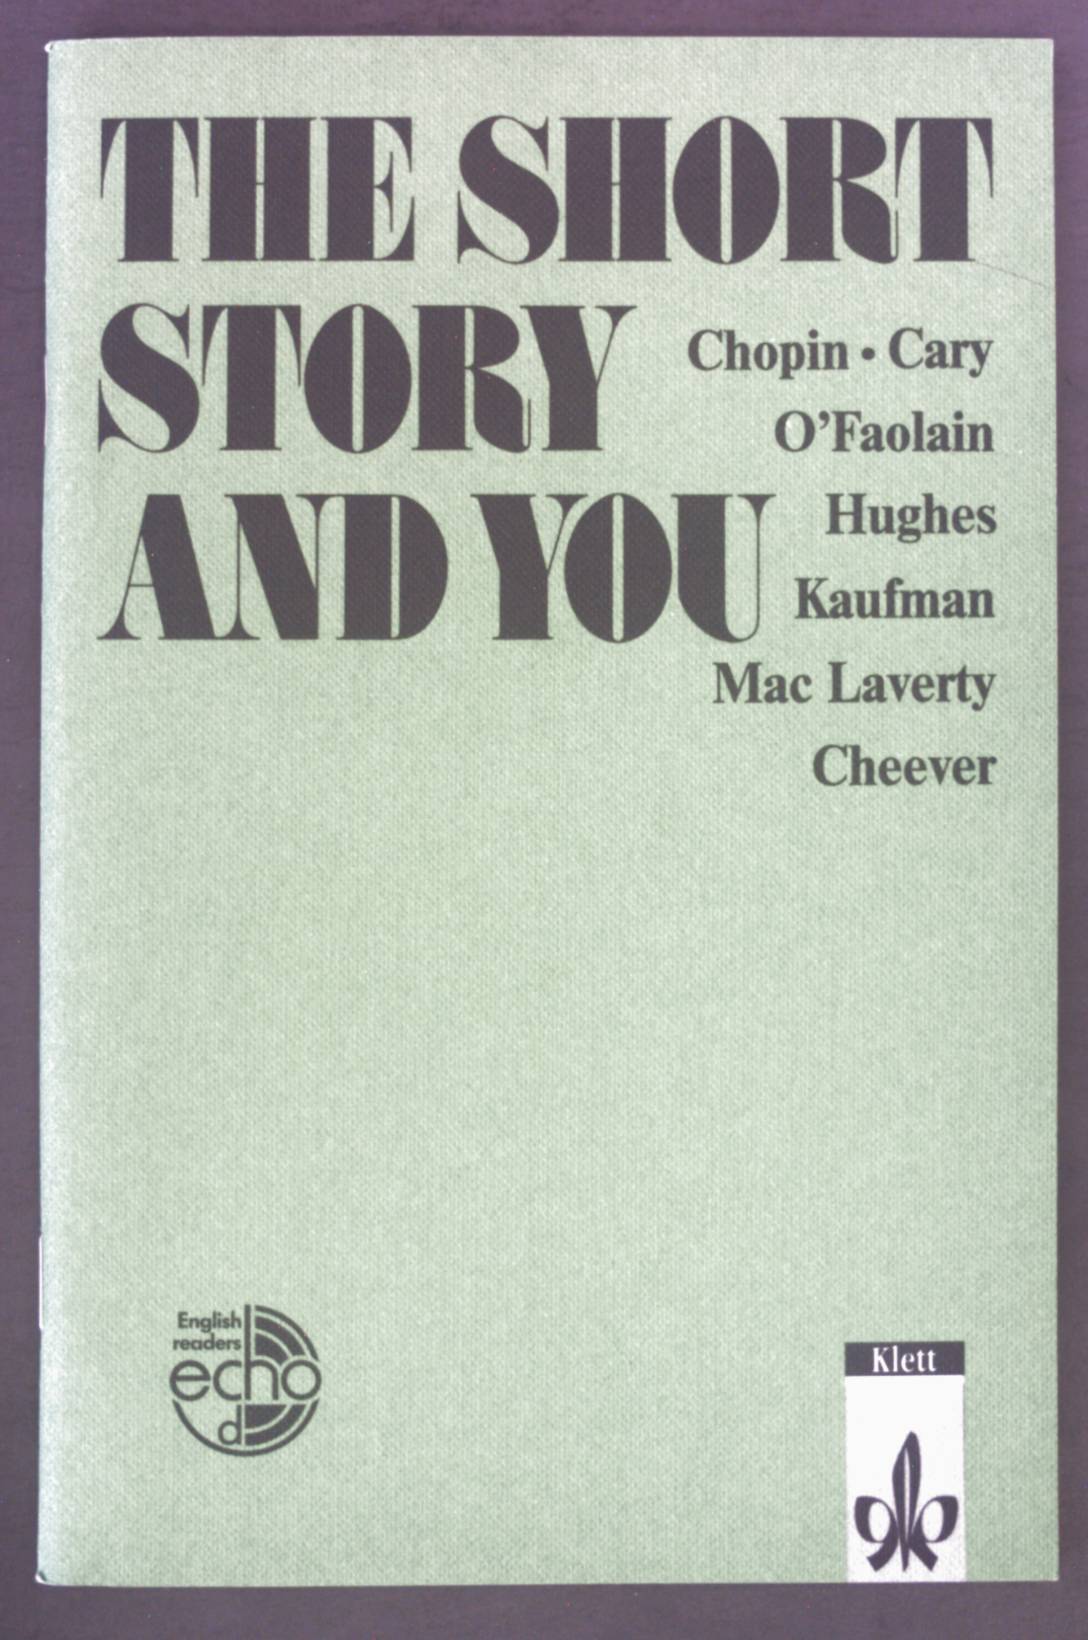 The short story and you. - Chopin, Kate; OFaolain, Sean; Cary, Joyce; Hermes, Ursula